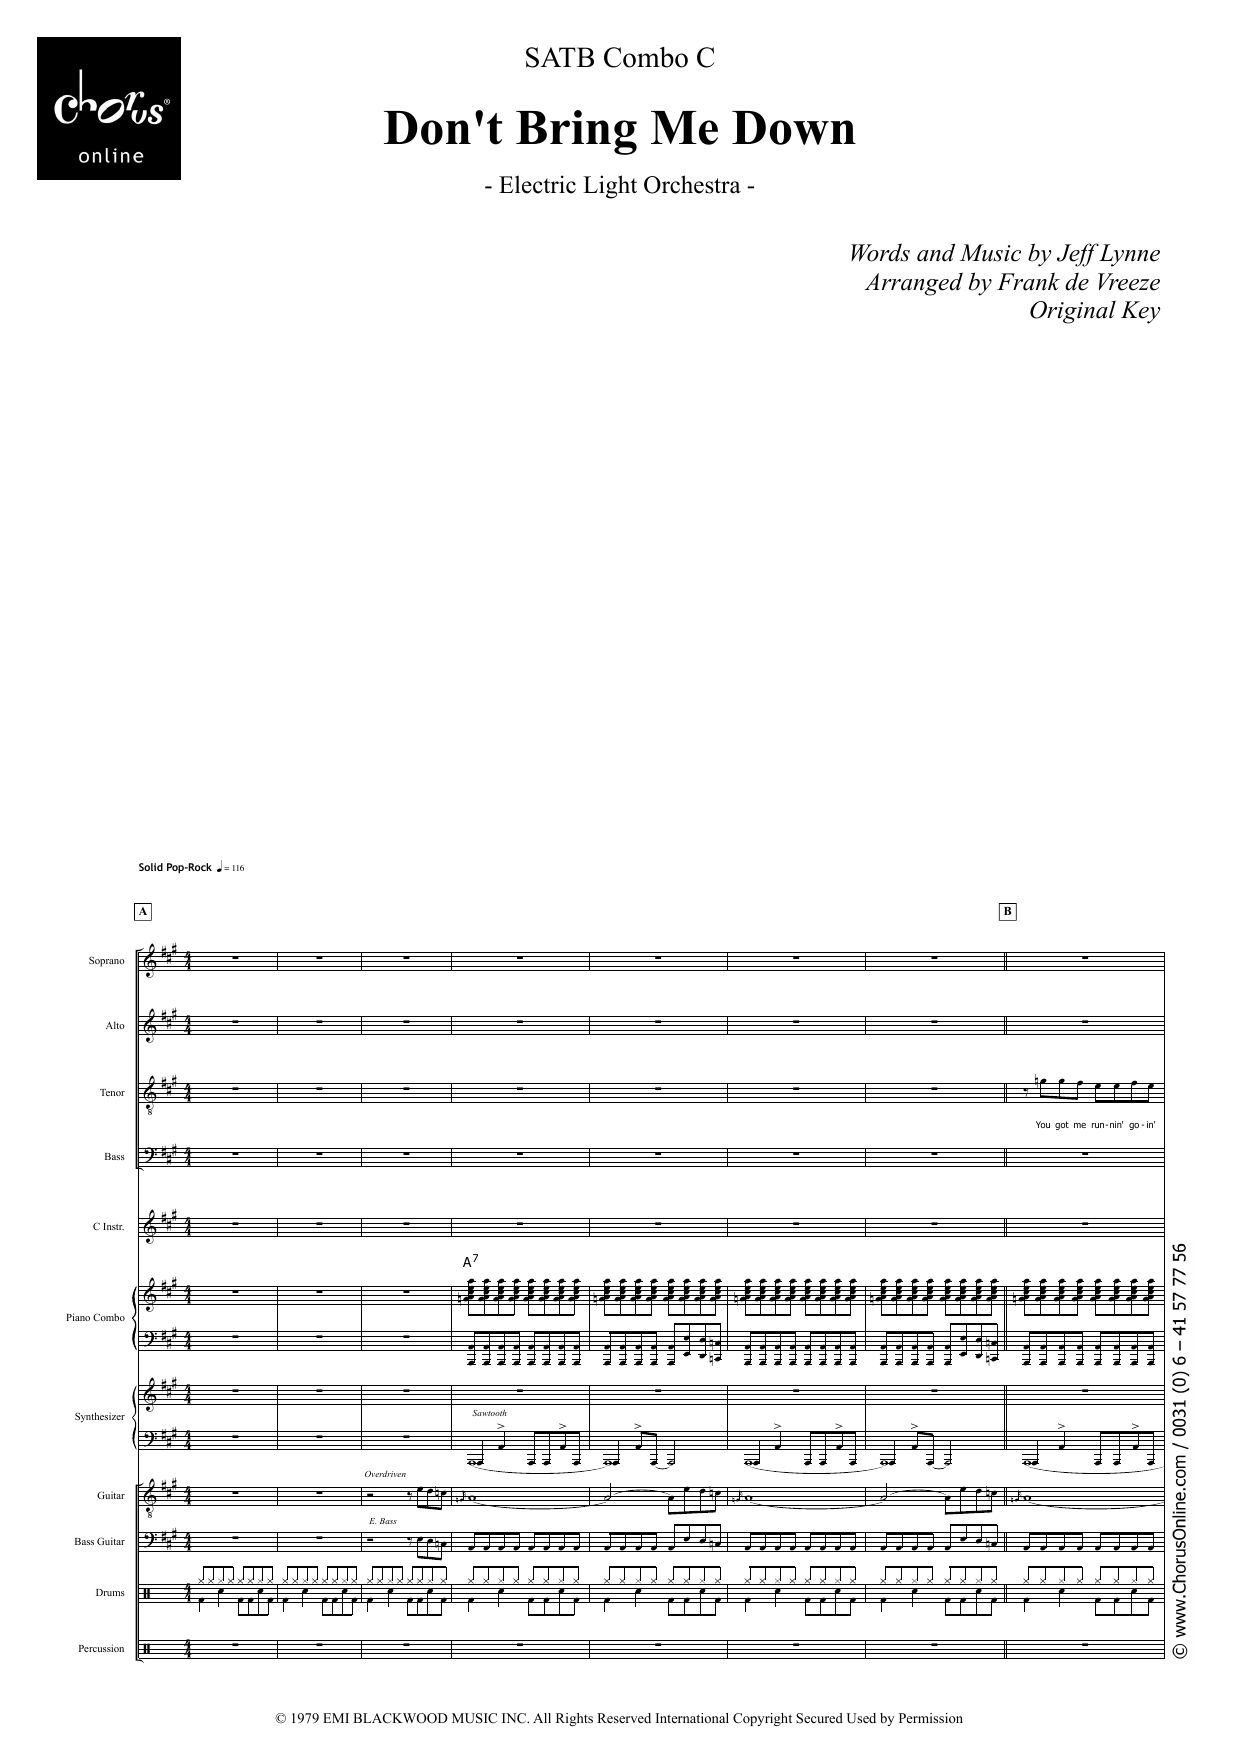 Electric Light Orchestra Don't Bring Me Down (arr. Frank de Vreeze) sheet music notes printable PDF score